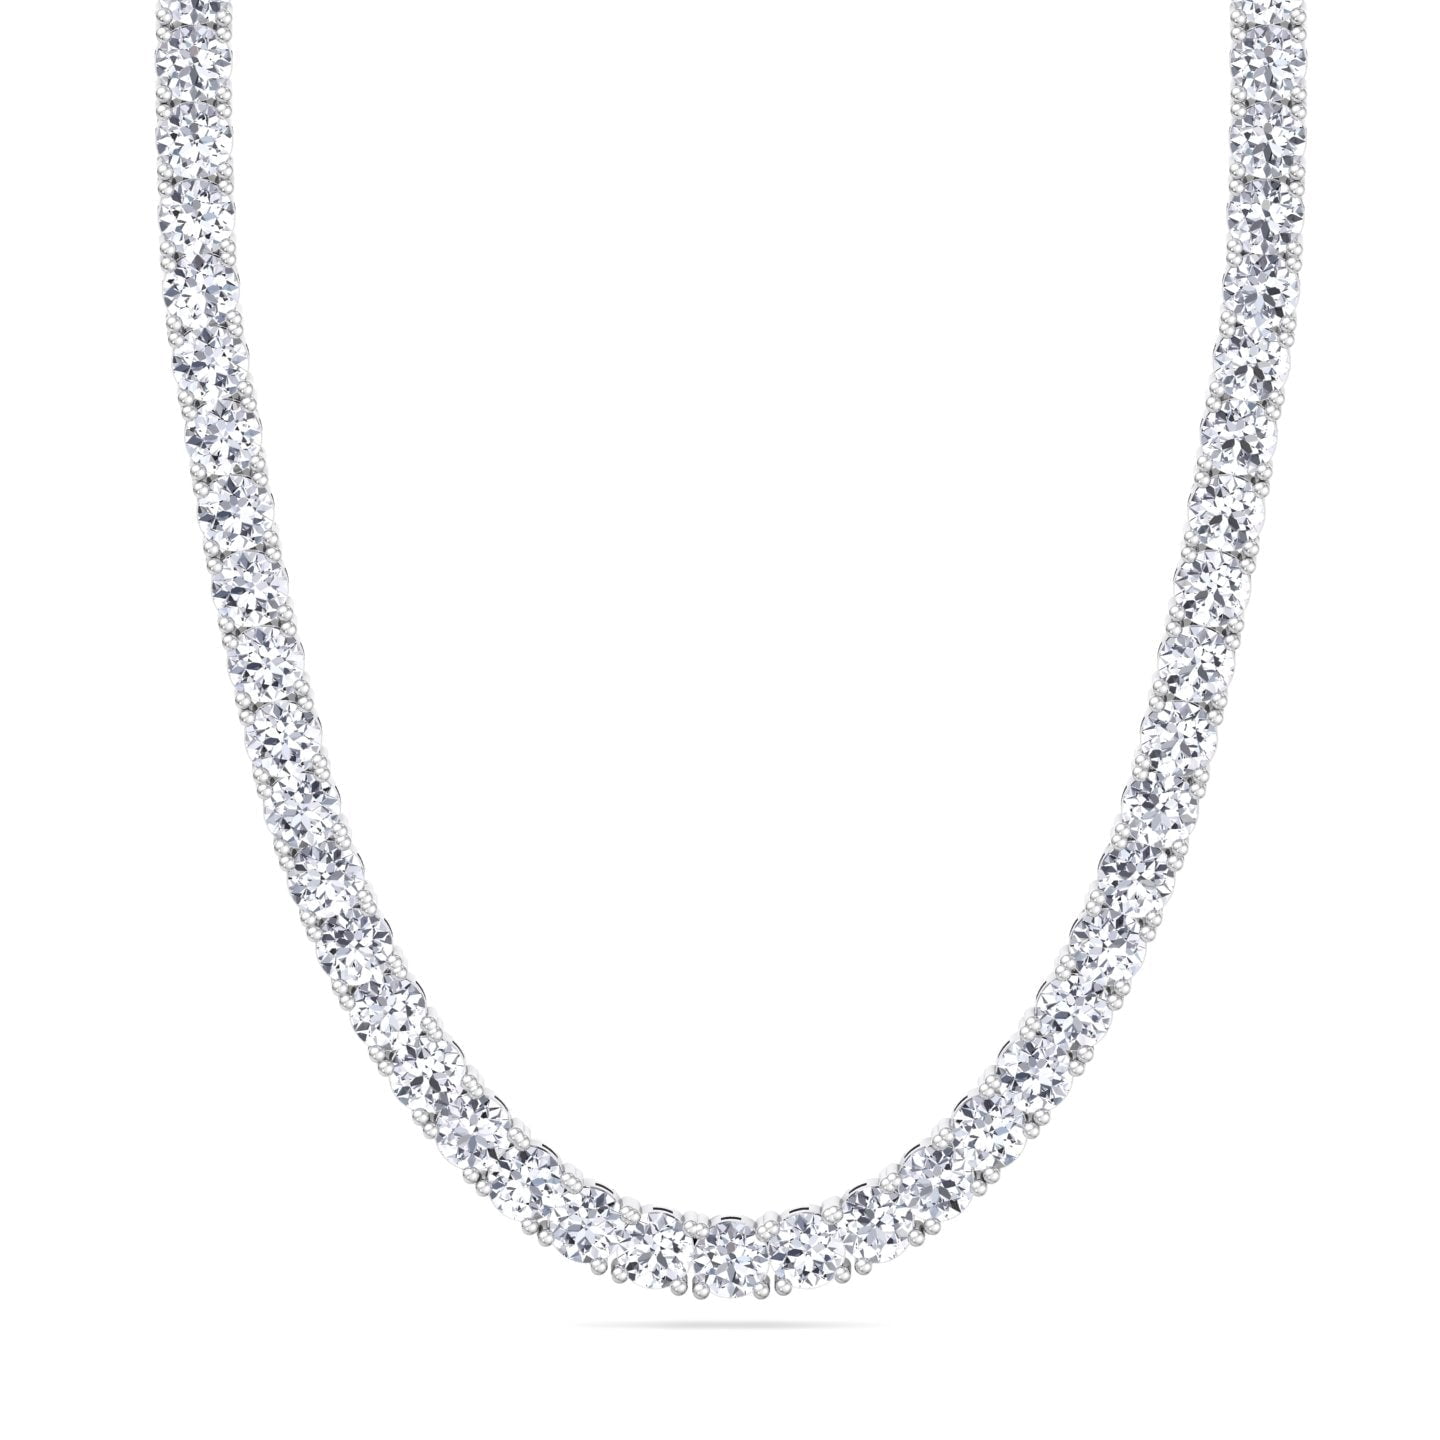 Silver 925 Original 12 Carat Brilliant Cut Diamond Test Past Blue Water  Drop Shaped Moissanite Pendant Necklace Gemstone Jewelry - Necklaces -  AliExpress